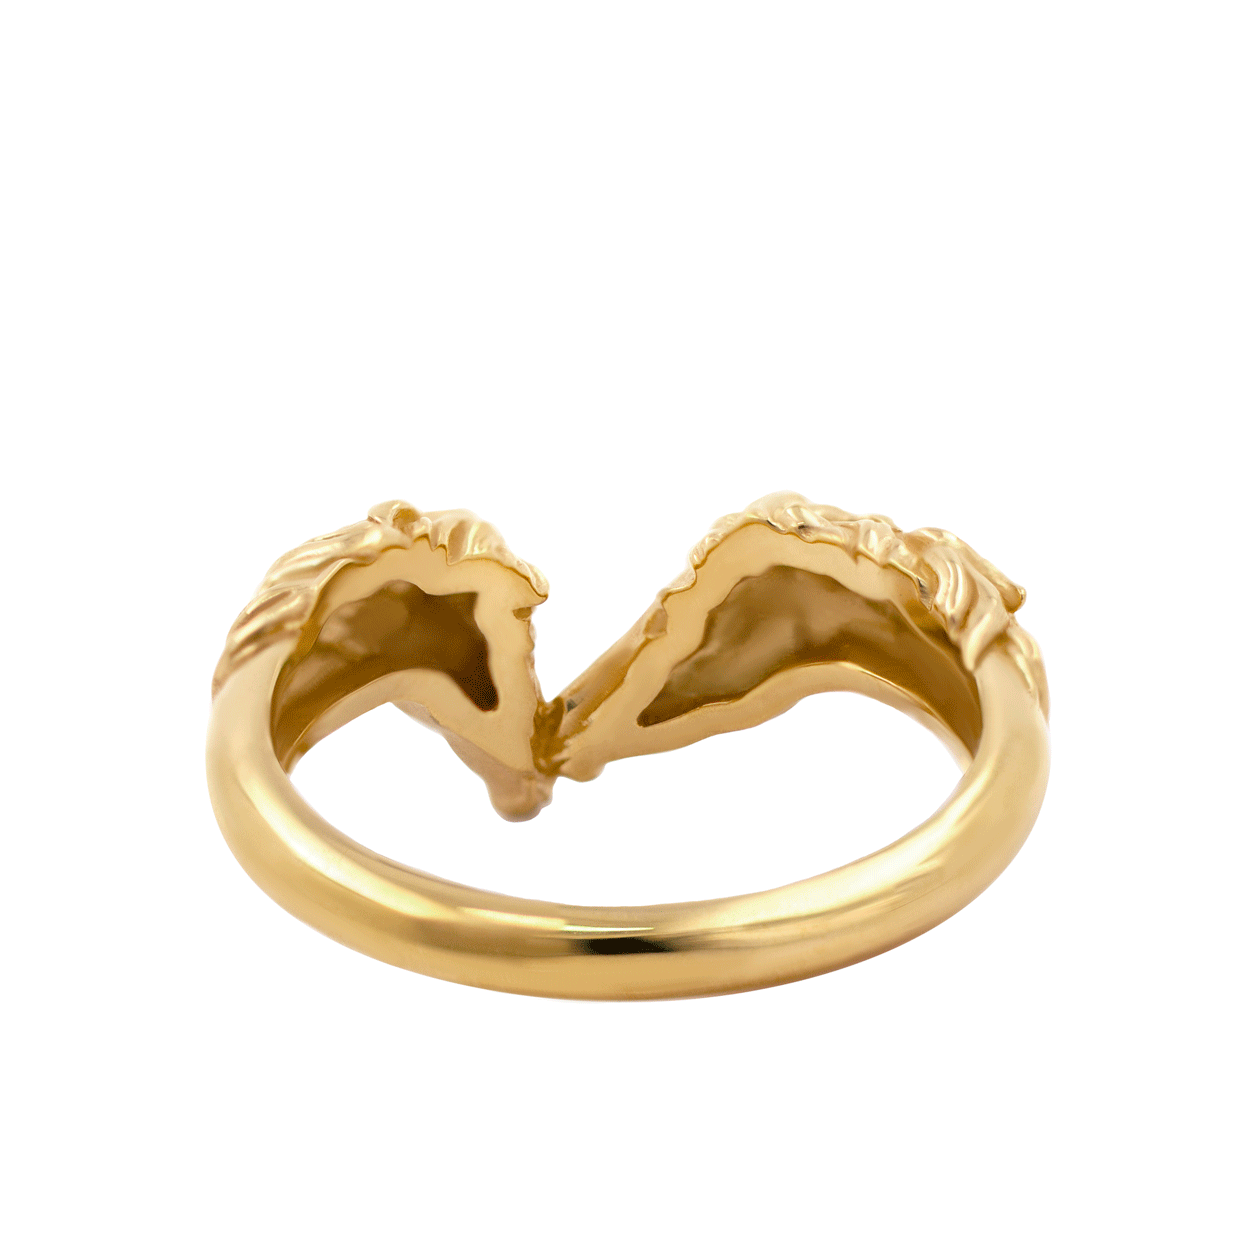 Gold Ring “HORSE” - Manuel Carrera Cordon